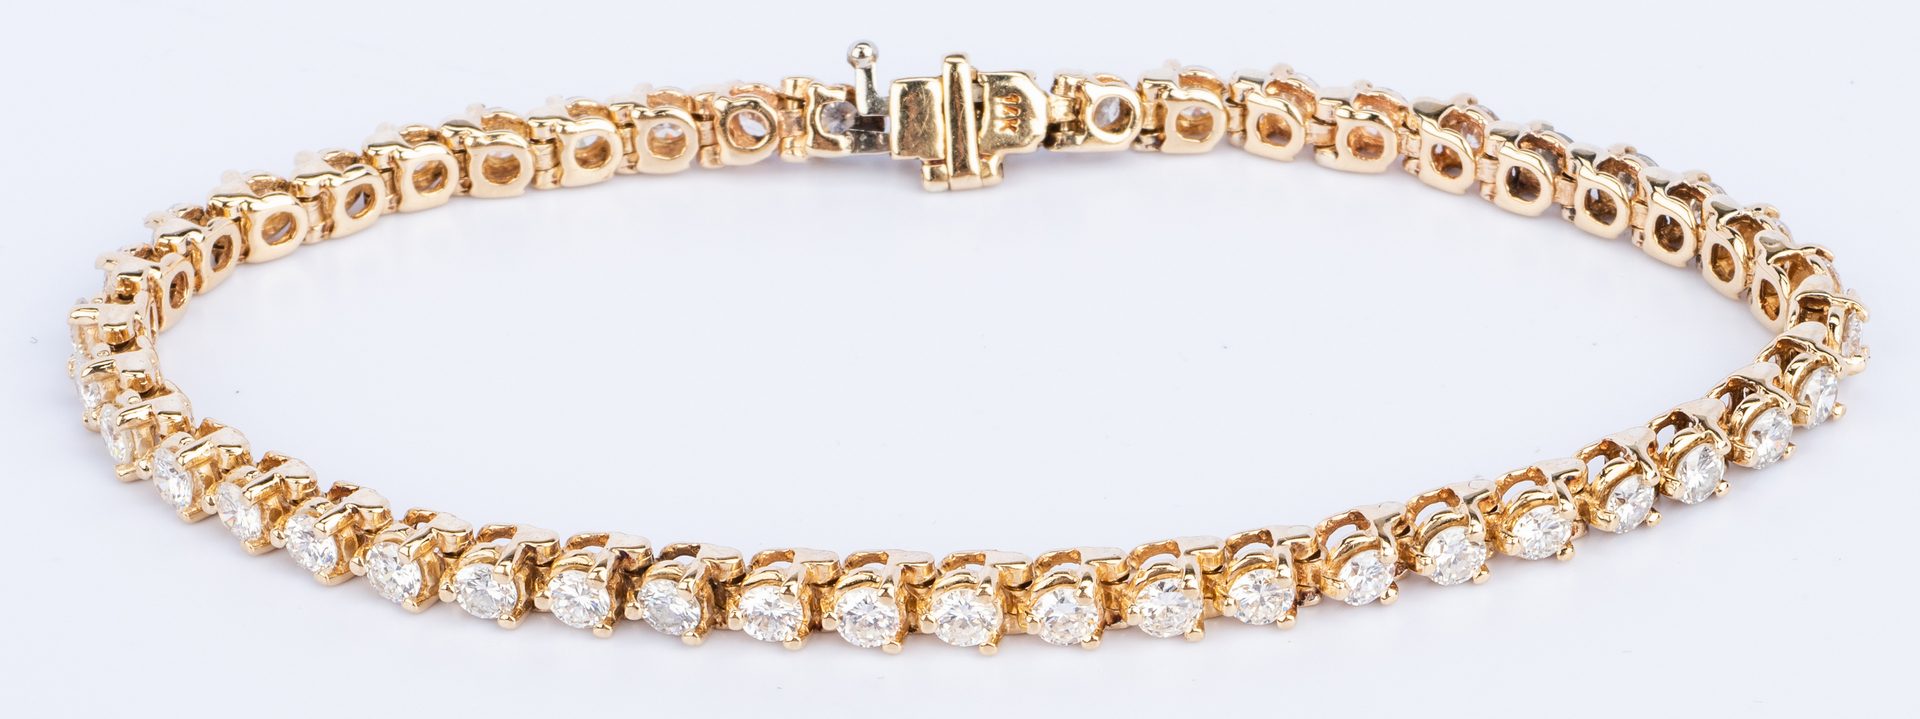 Lot 191: Diamond Bracelet and Choker